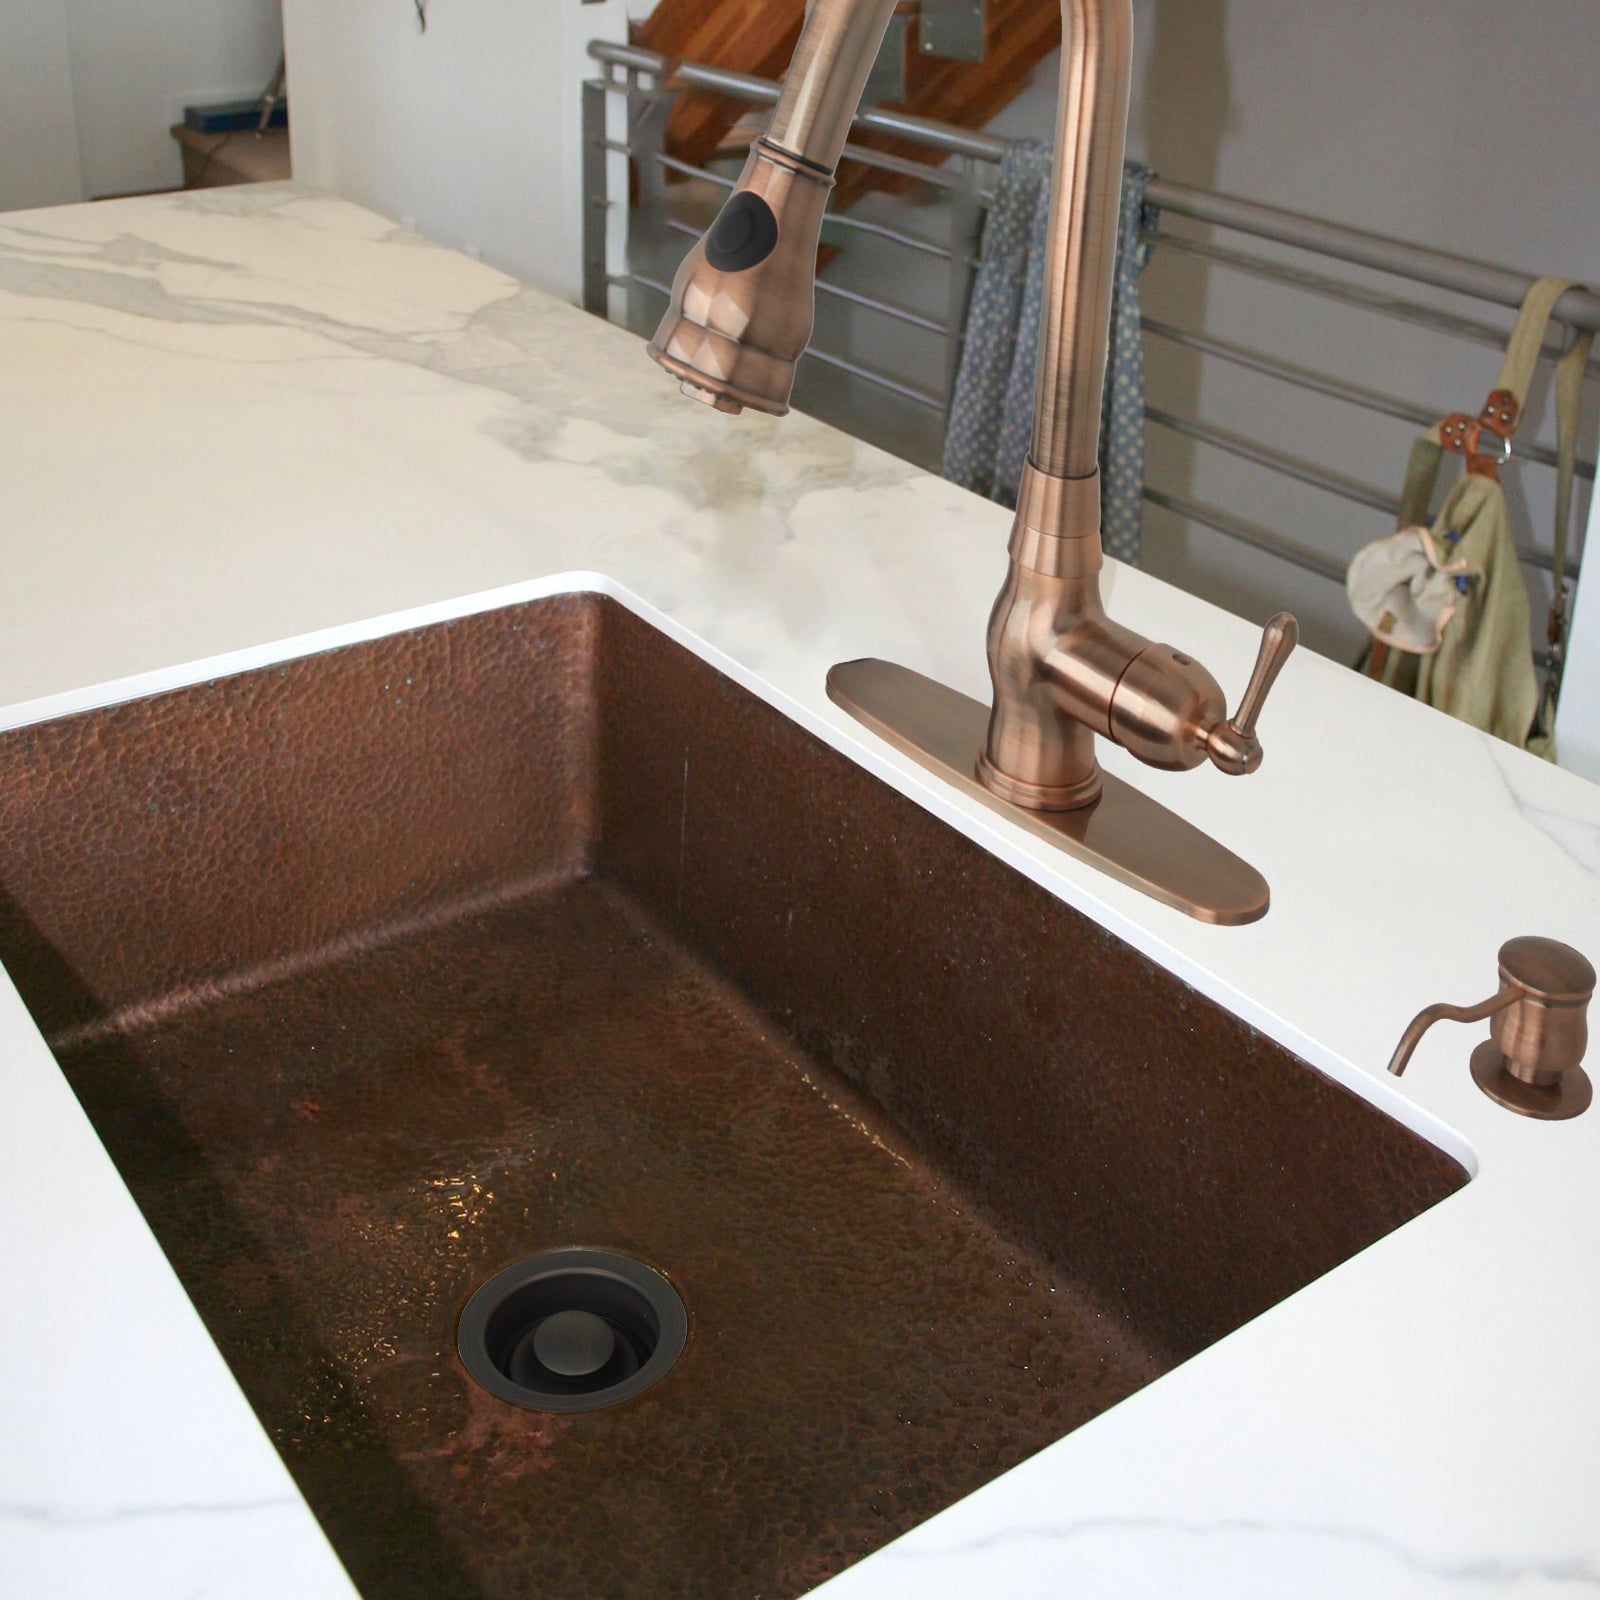 Brushed Gold Kitchen Sink Garbage Disposal Flange Stopper - AK82202BTG